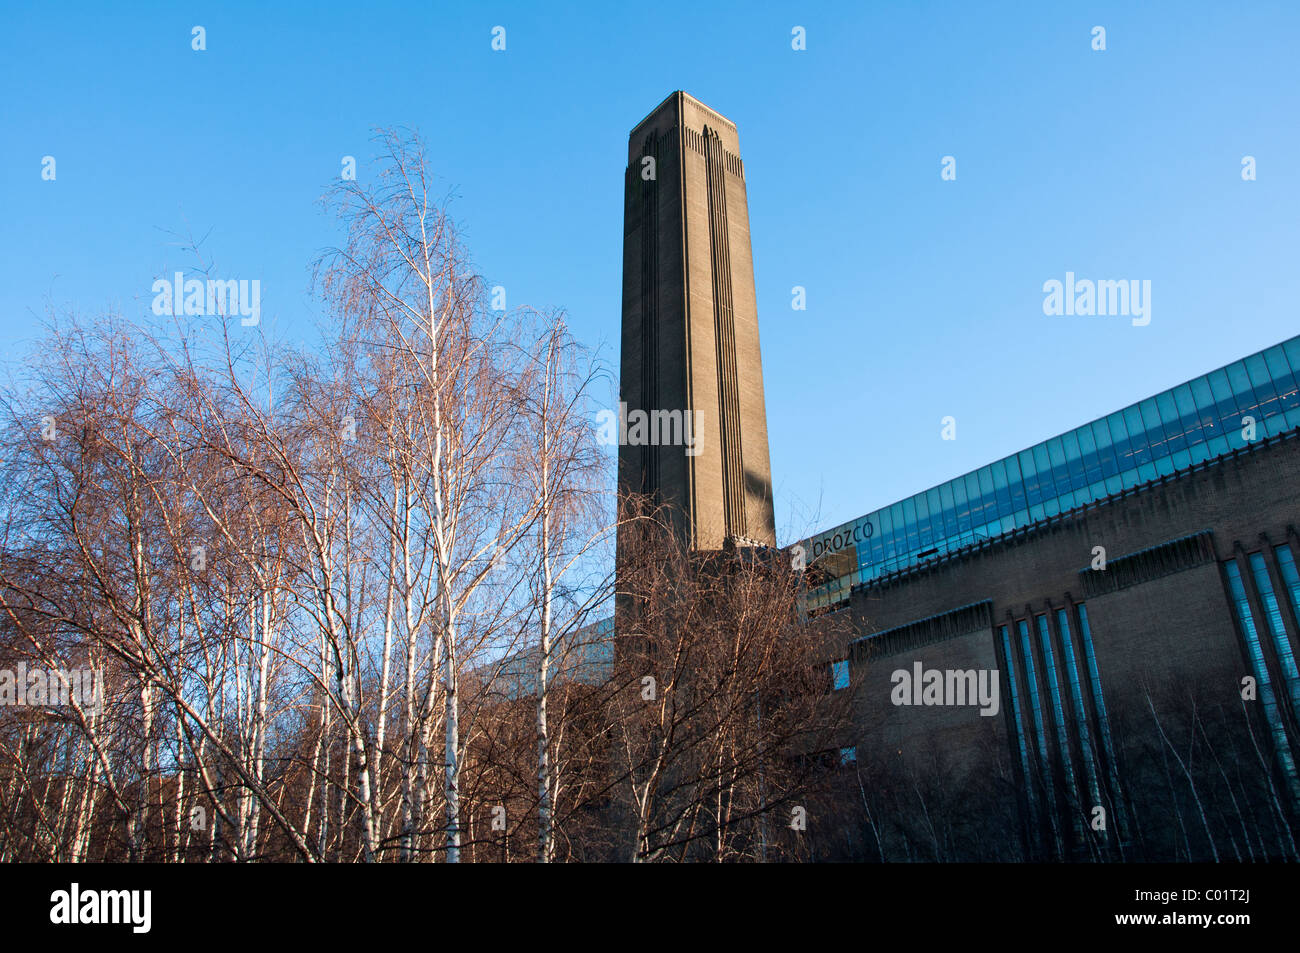 Galería de arte Tate Modern, Bankside, London, England, Reino Unido Foto de stock